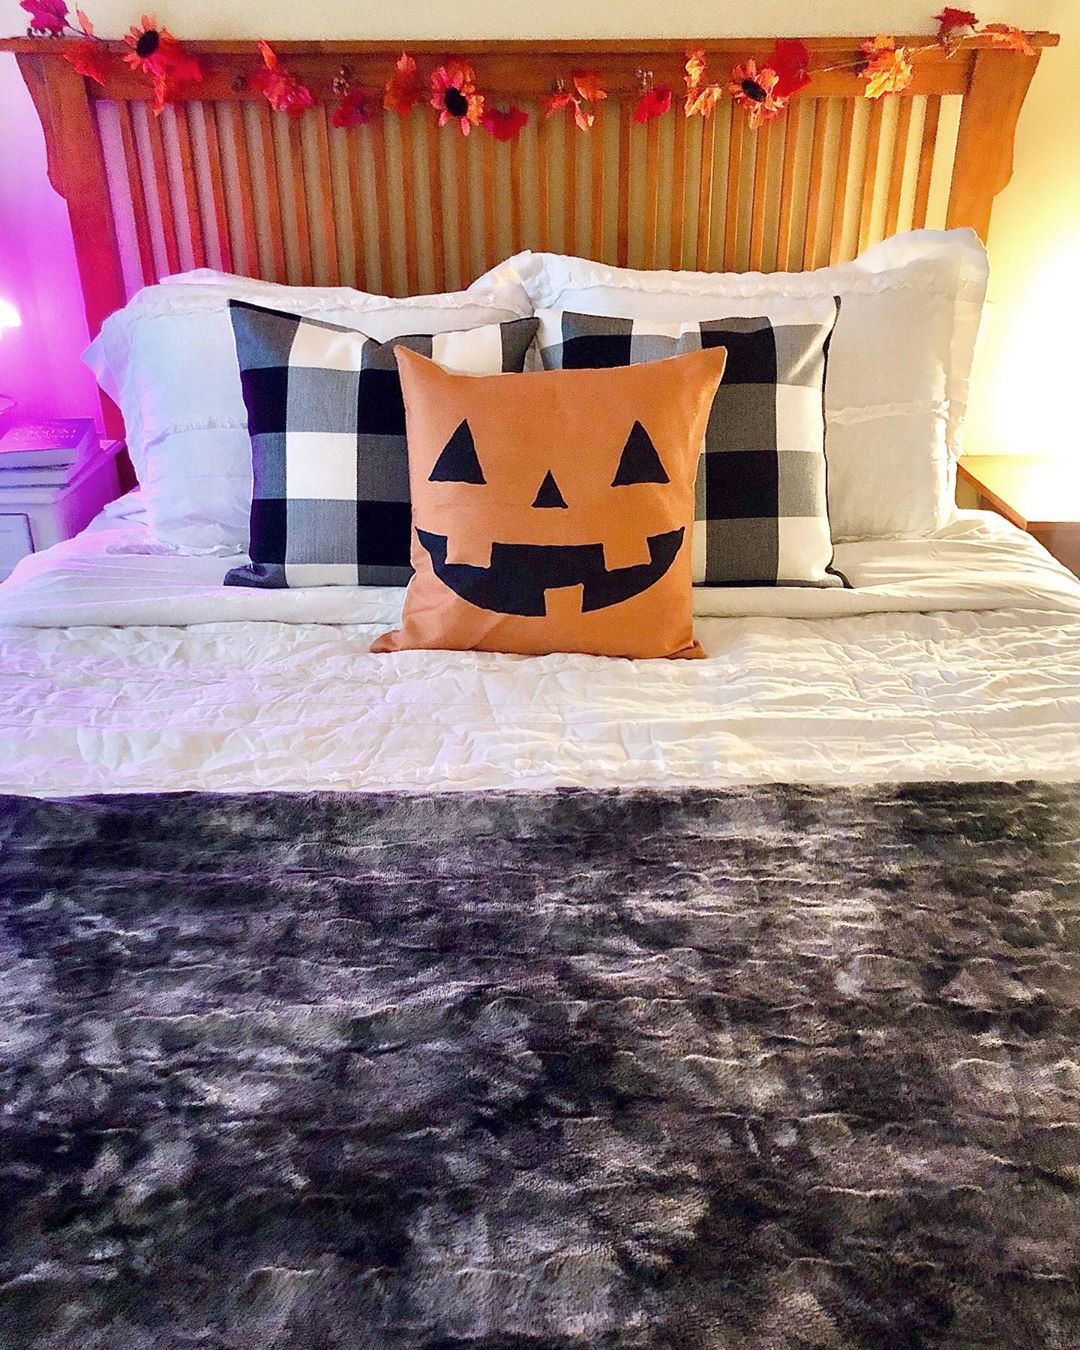 20+ Cozy But Spooky Halloween Bedroom Decoration Ideas